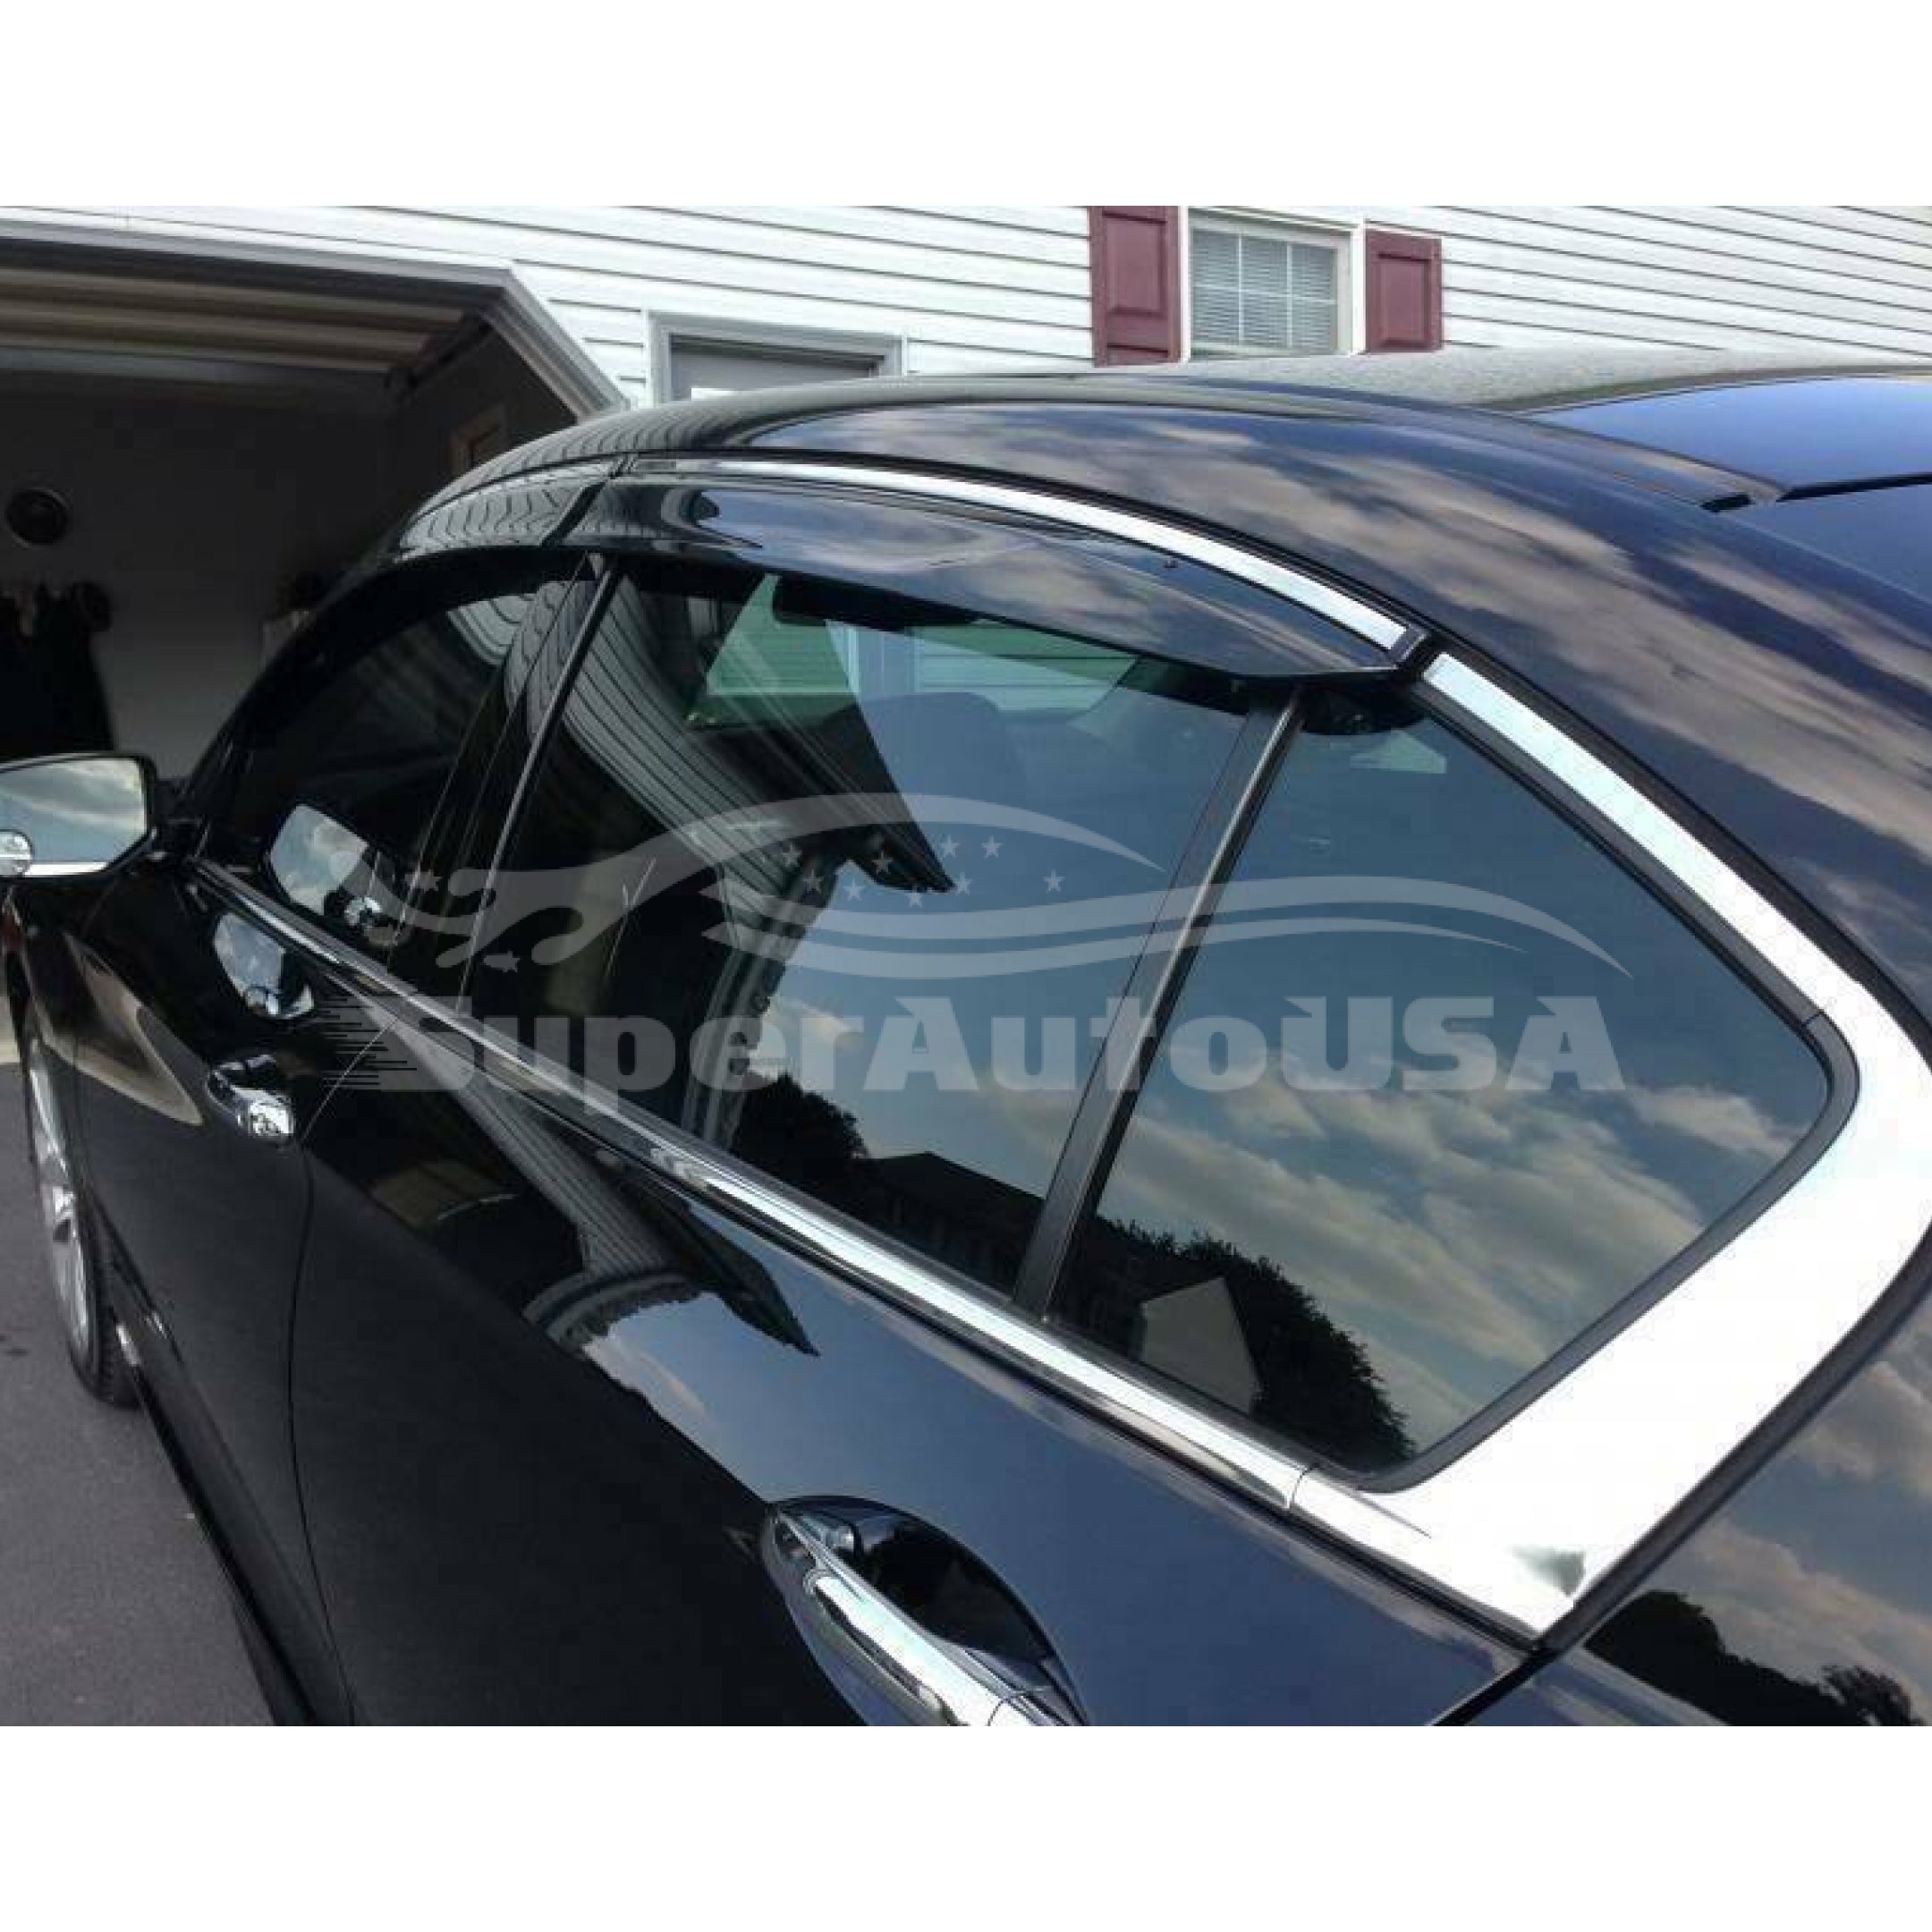 Ajuste 2012-2016 Subaru Crosstrek XV Clip-On Chrome Trim Vent Window Viseras Rain Sun Wind Guards Shade Deflectors